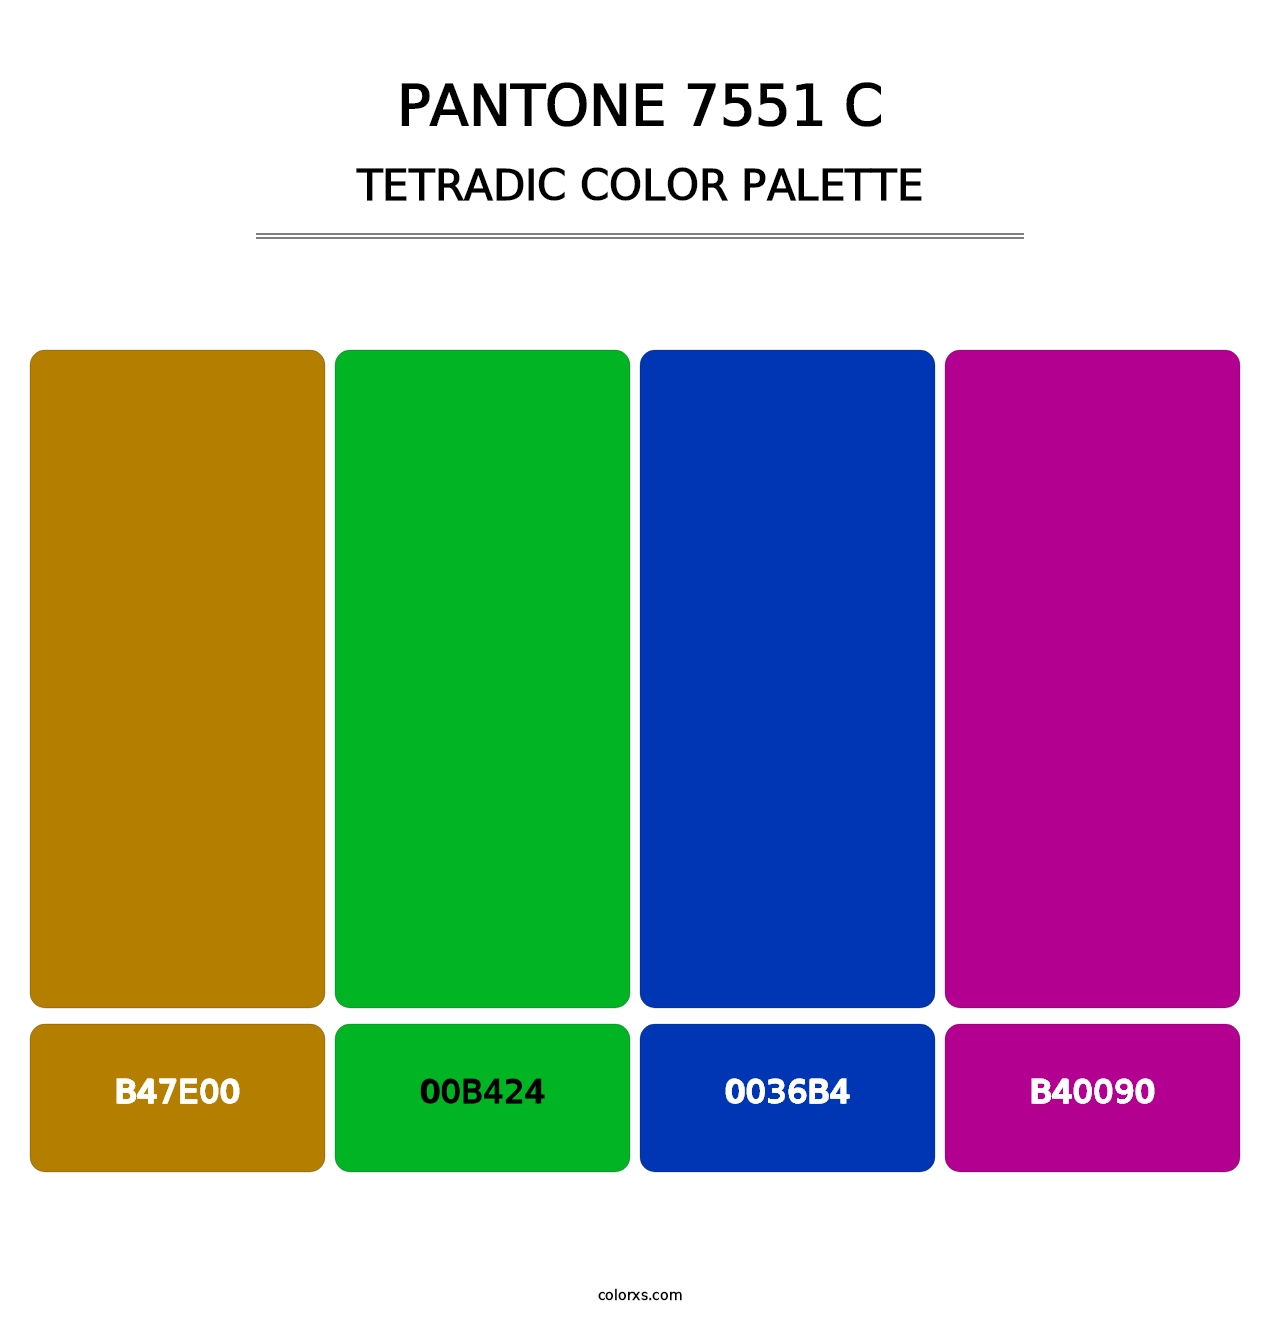 PANTONE 7551 C - Tetradic Color Palette